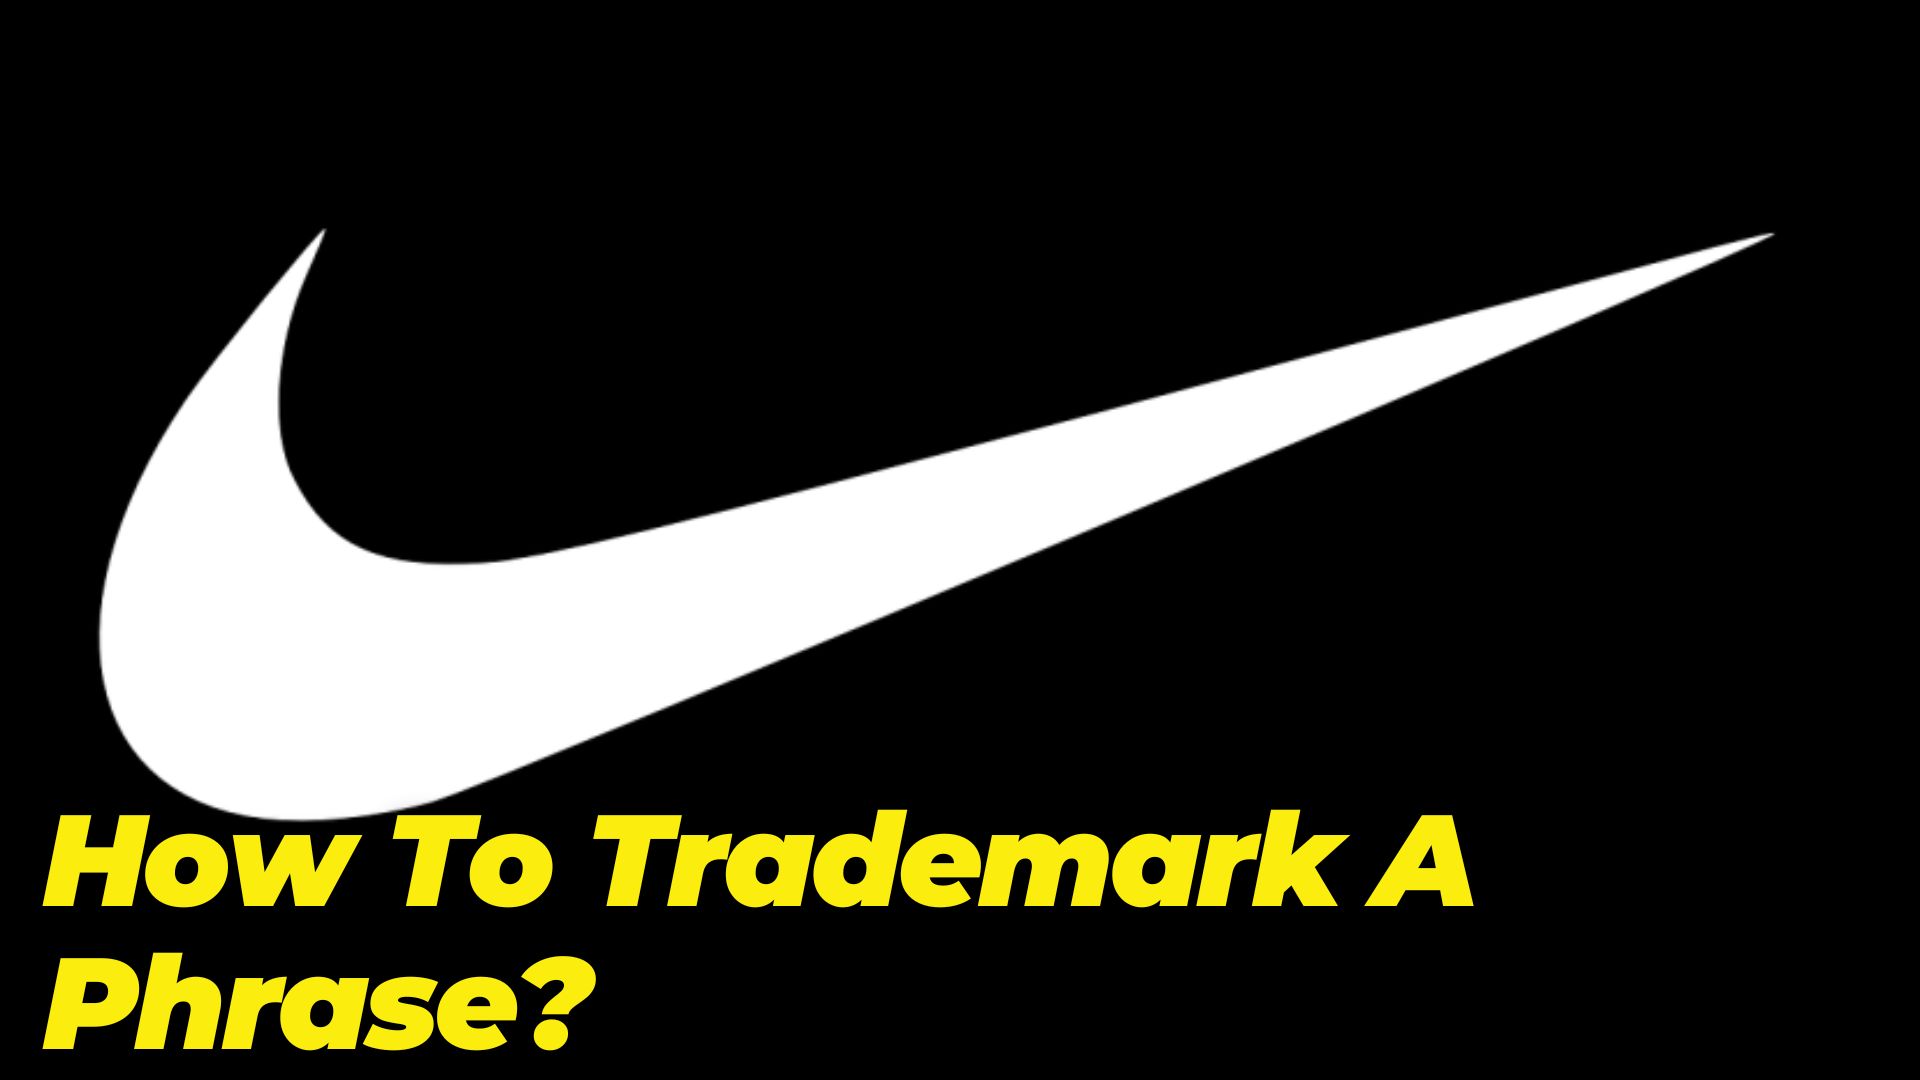 How To Trademark A Phrase?